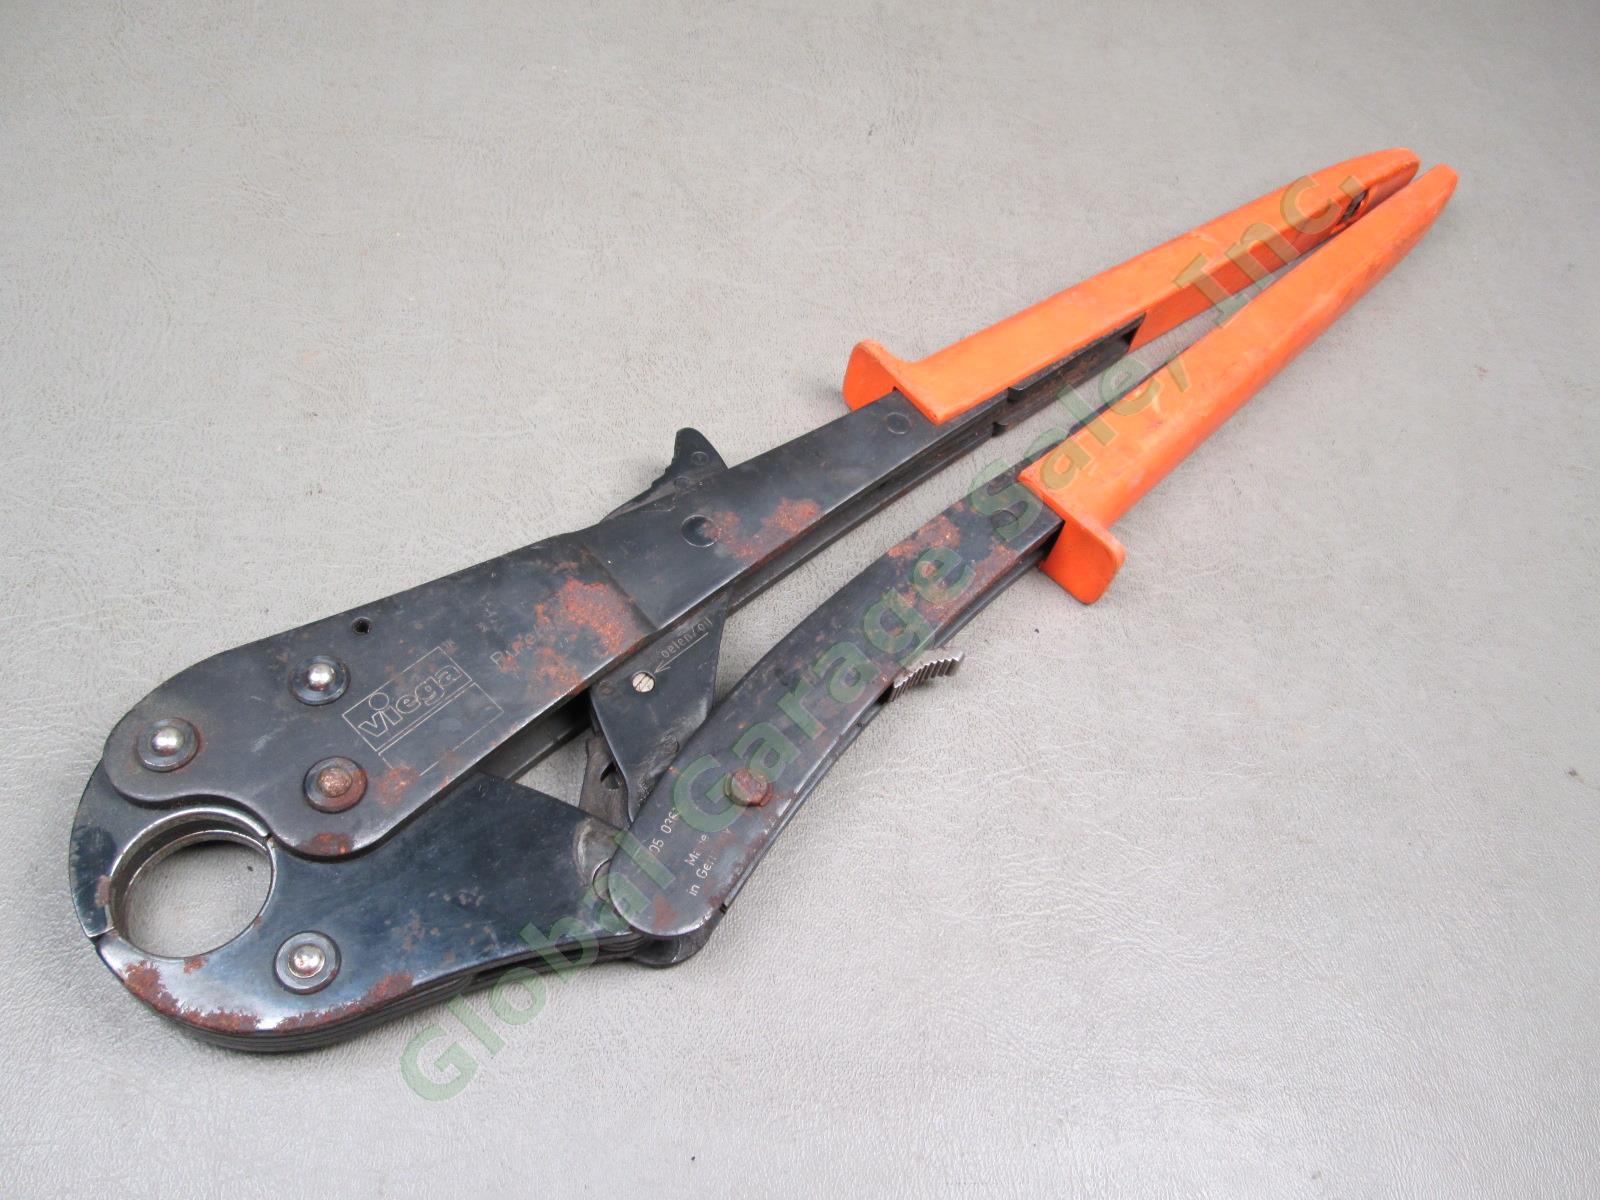 Viega PureFlow 1" PEX Press Tool Ratcheting Plumbing Crimper Orange Handle 50060 3